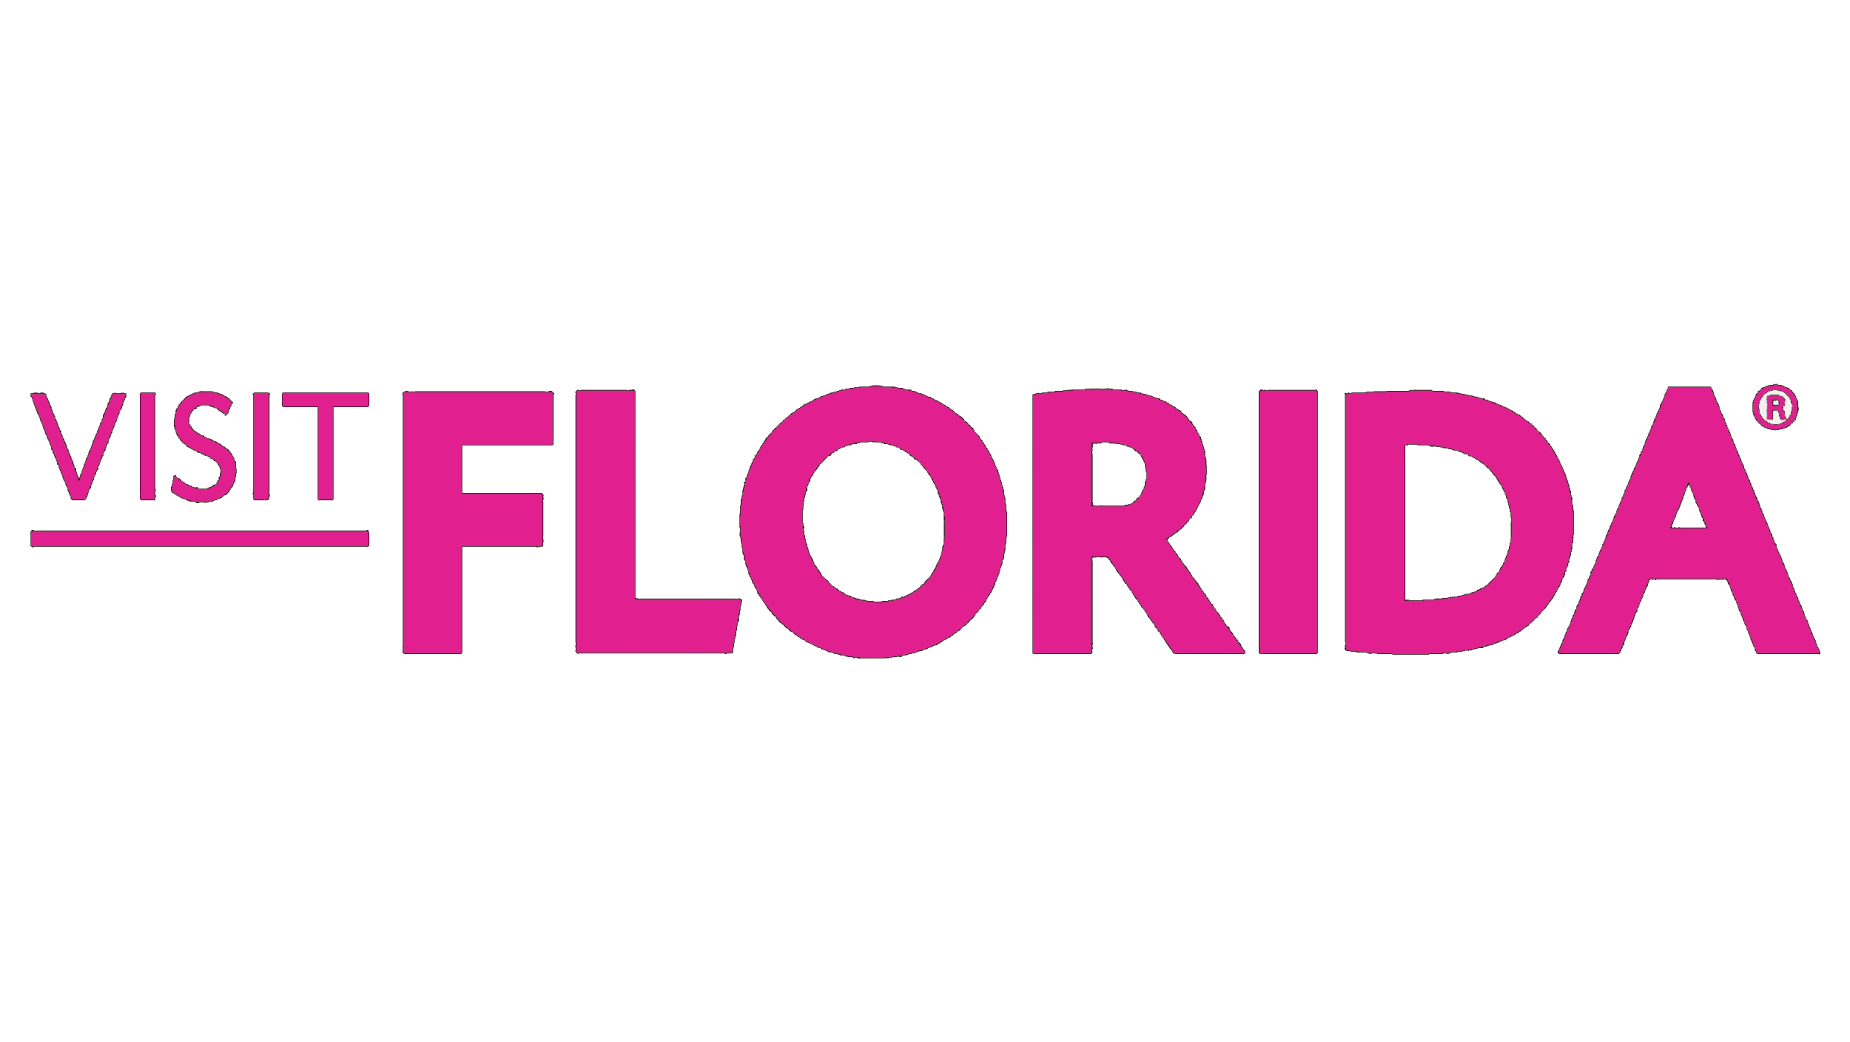 BarkleyOKRP wins Visit Florida account